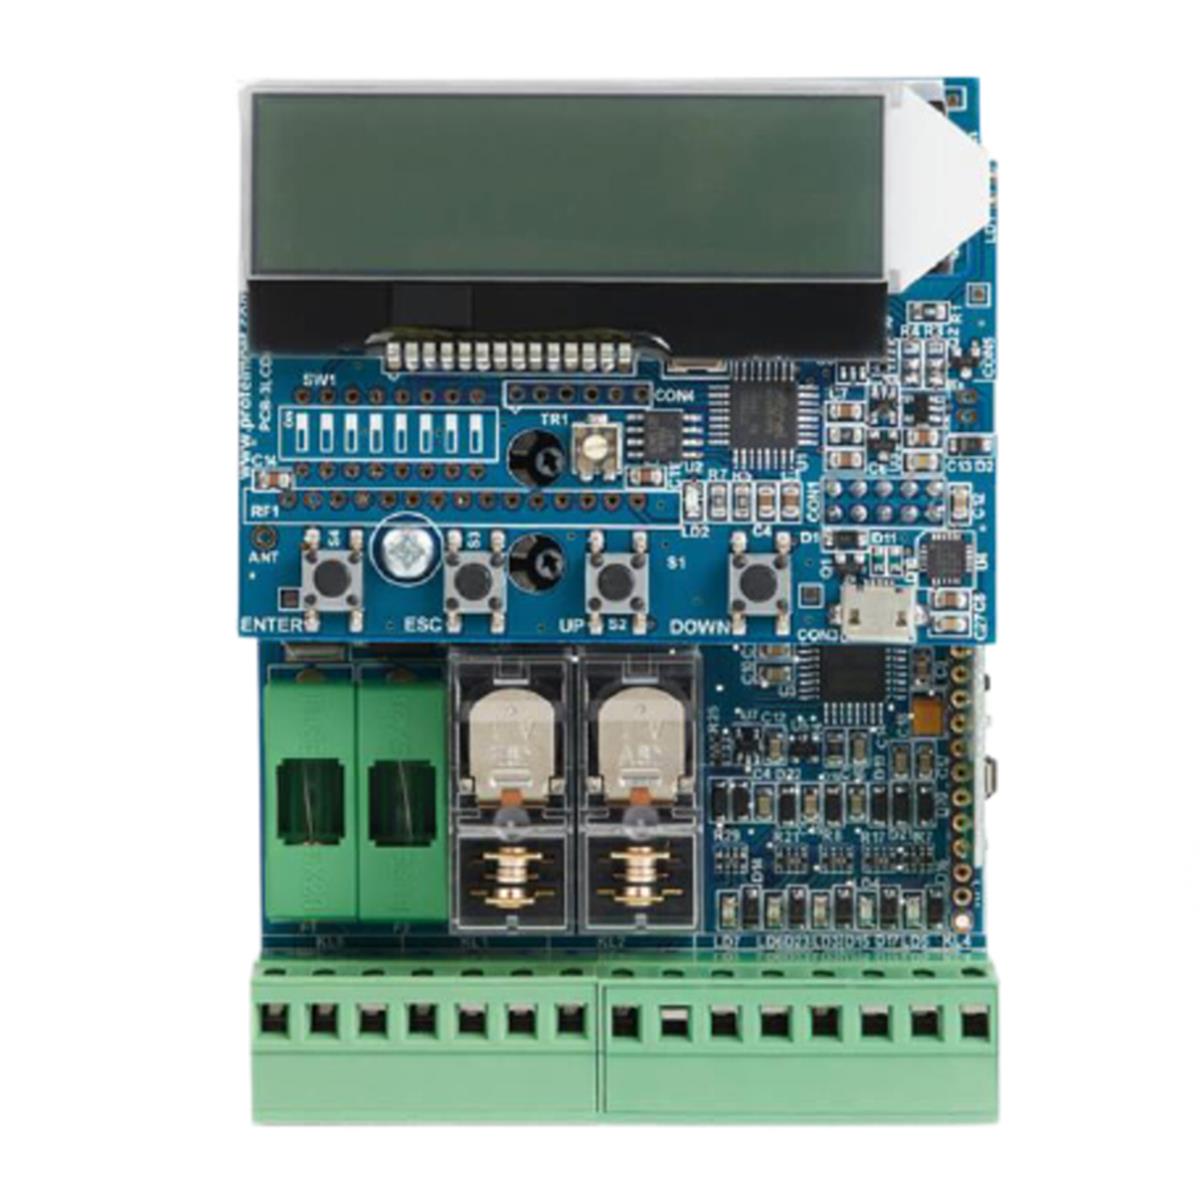 4033 LCD Profelmnet Πίνακας ελέγχου αυτοματισμός για μοτέρ συρόμενης γκαραζόπορτας, ανοιγόμενης Μ/Φ, ρολού και μπάρες 230VDC Σταθερού κωδικού 433,92MHz